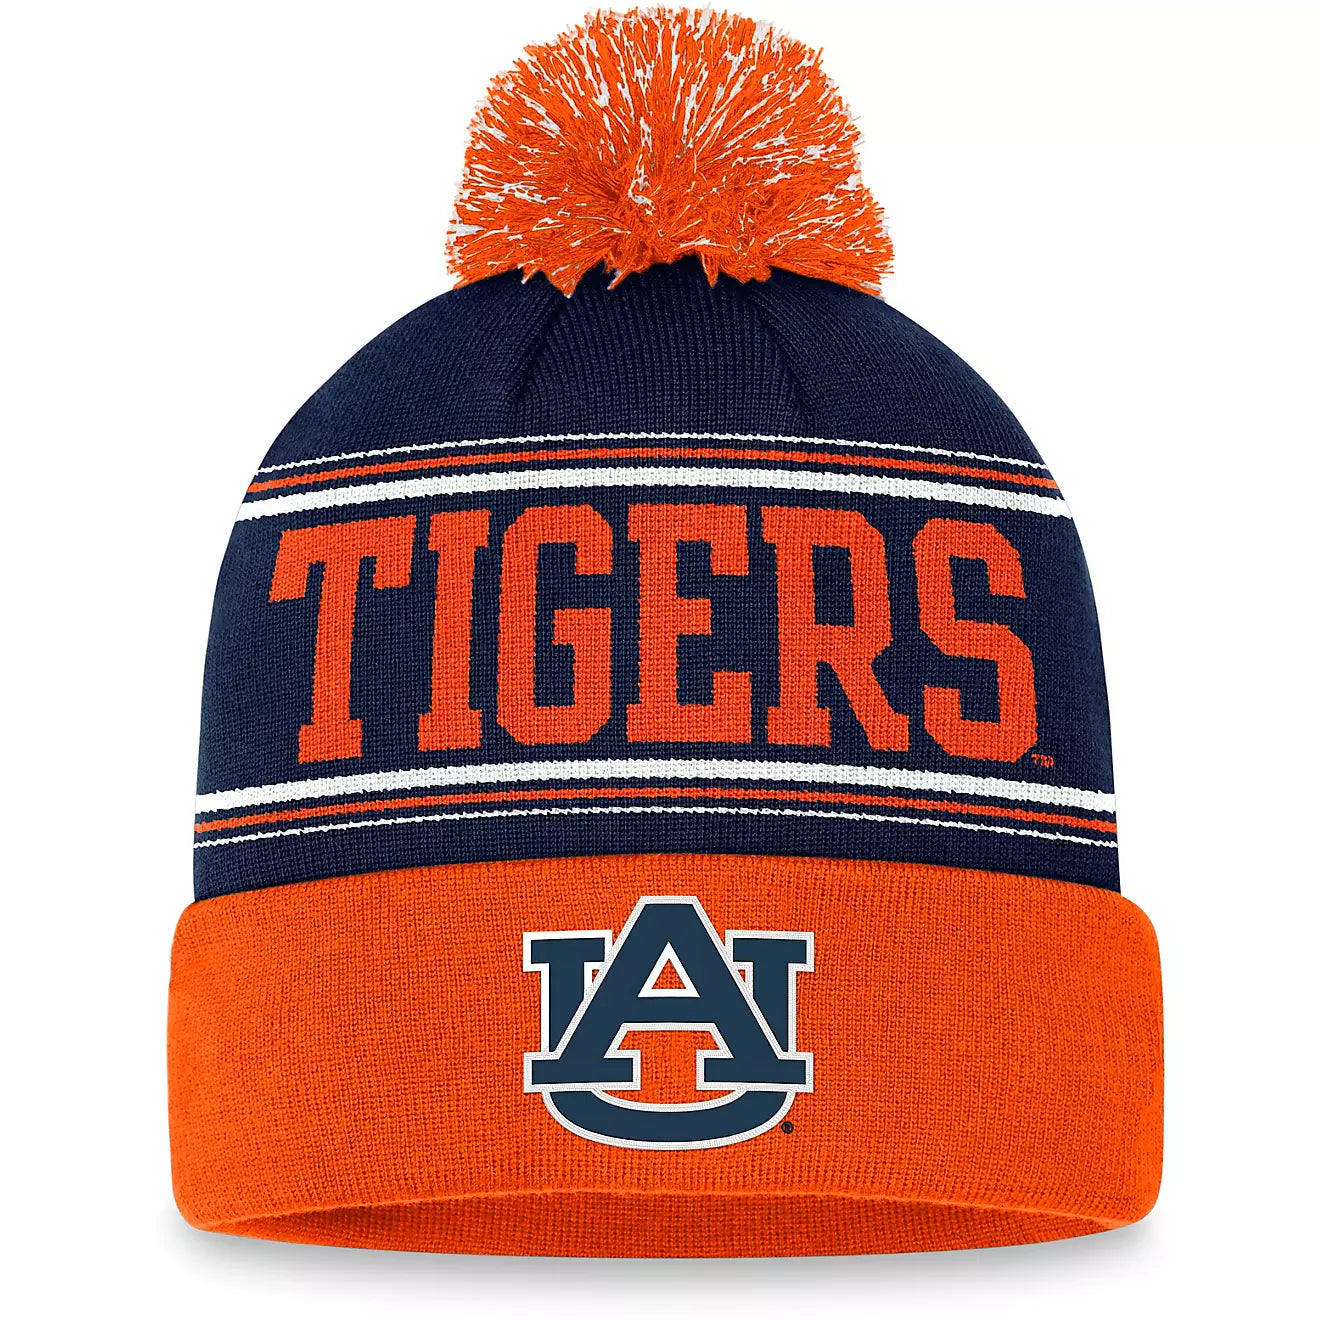 Auburn Tigers Top of the World Fashion Cuffed Pom Knit Hat